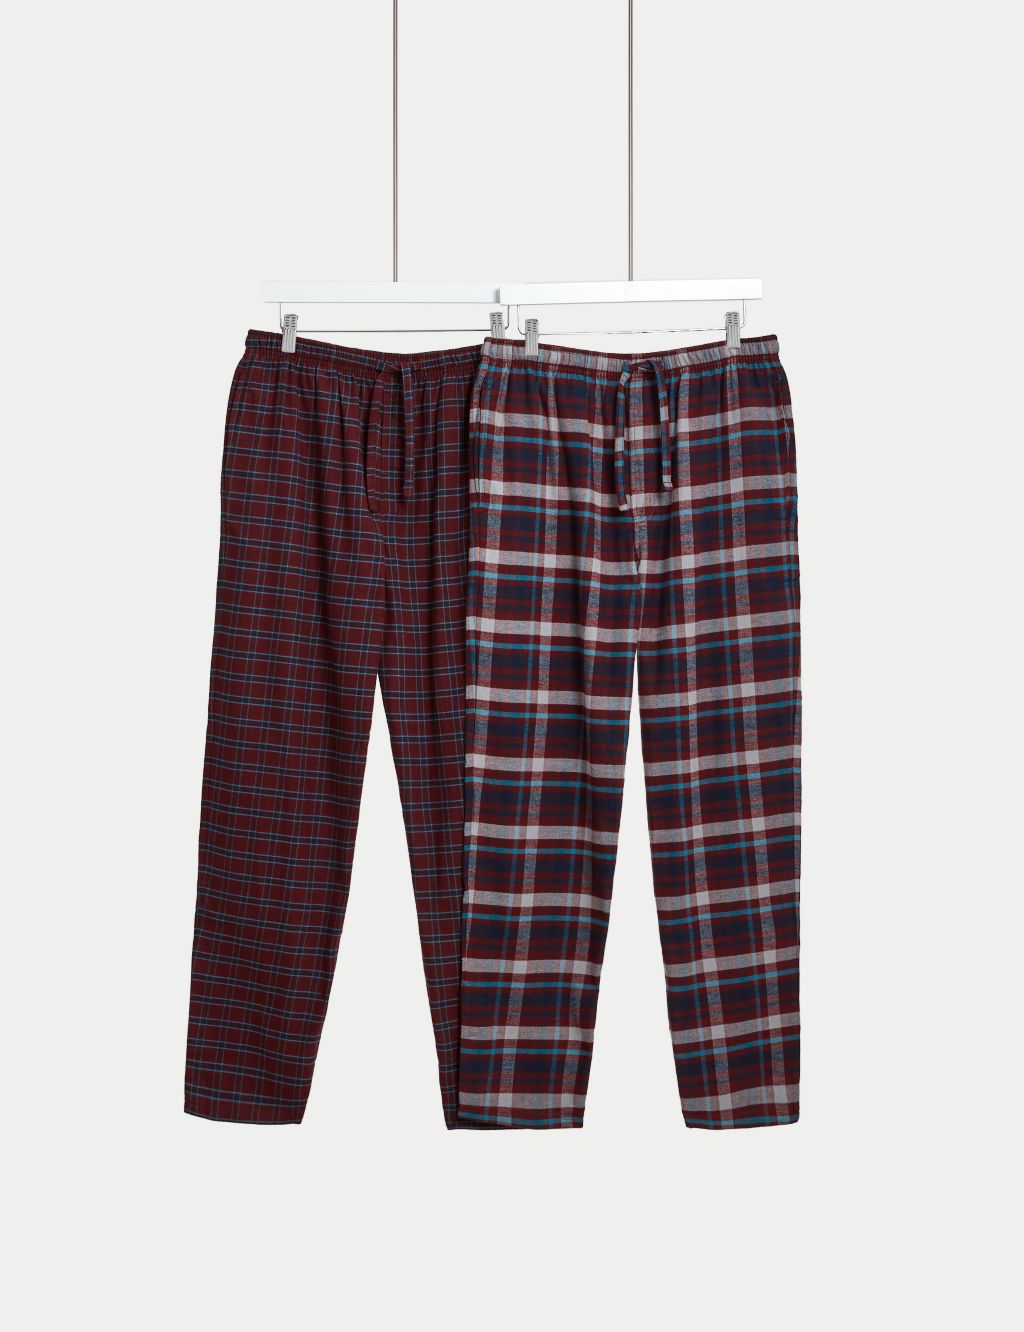 Sova Men's 3-Pack Ultra Comfy Fit Micro Fleece Pajama Pants (3 pcs Set)  (Small, Black Plaid/Green Plaid/Blue Plaid) : : Clothing, Shoes &  Accessories